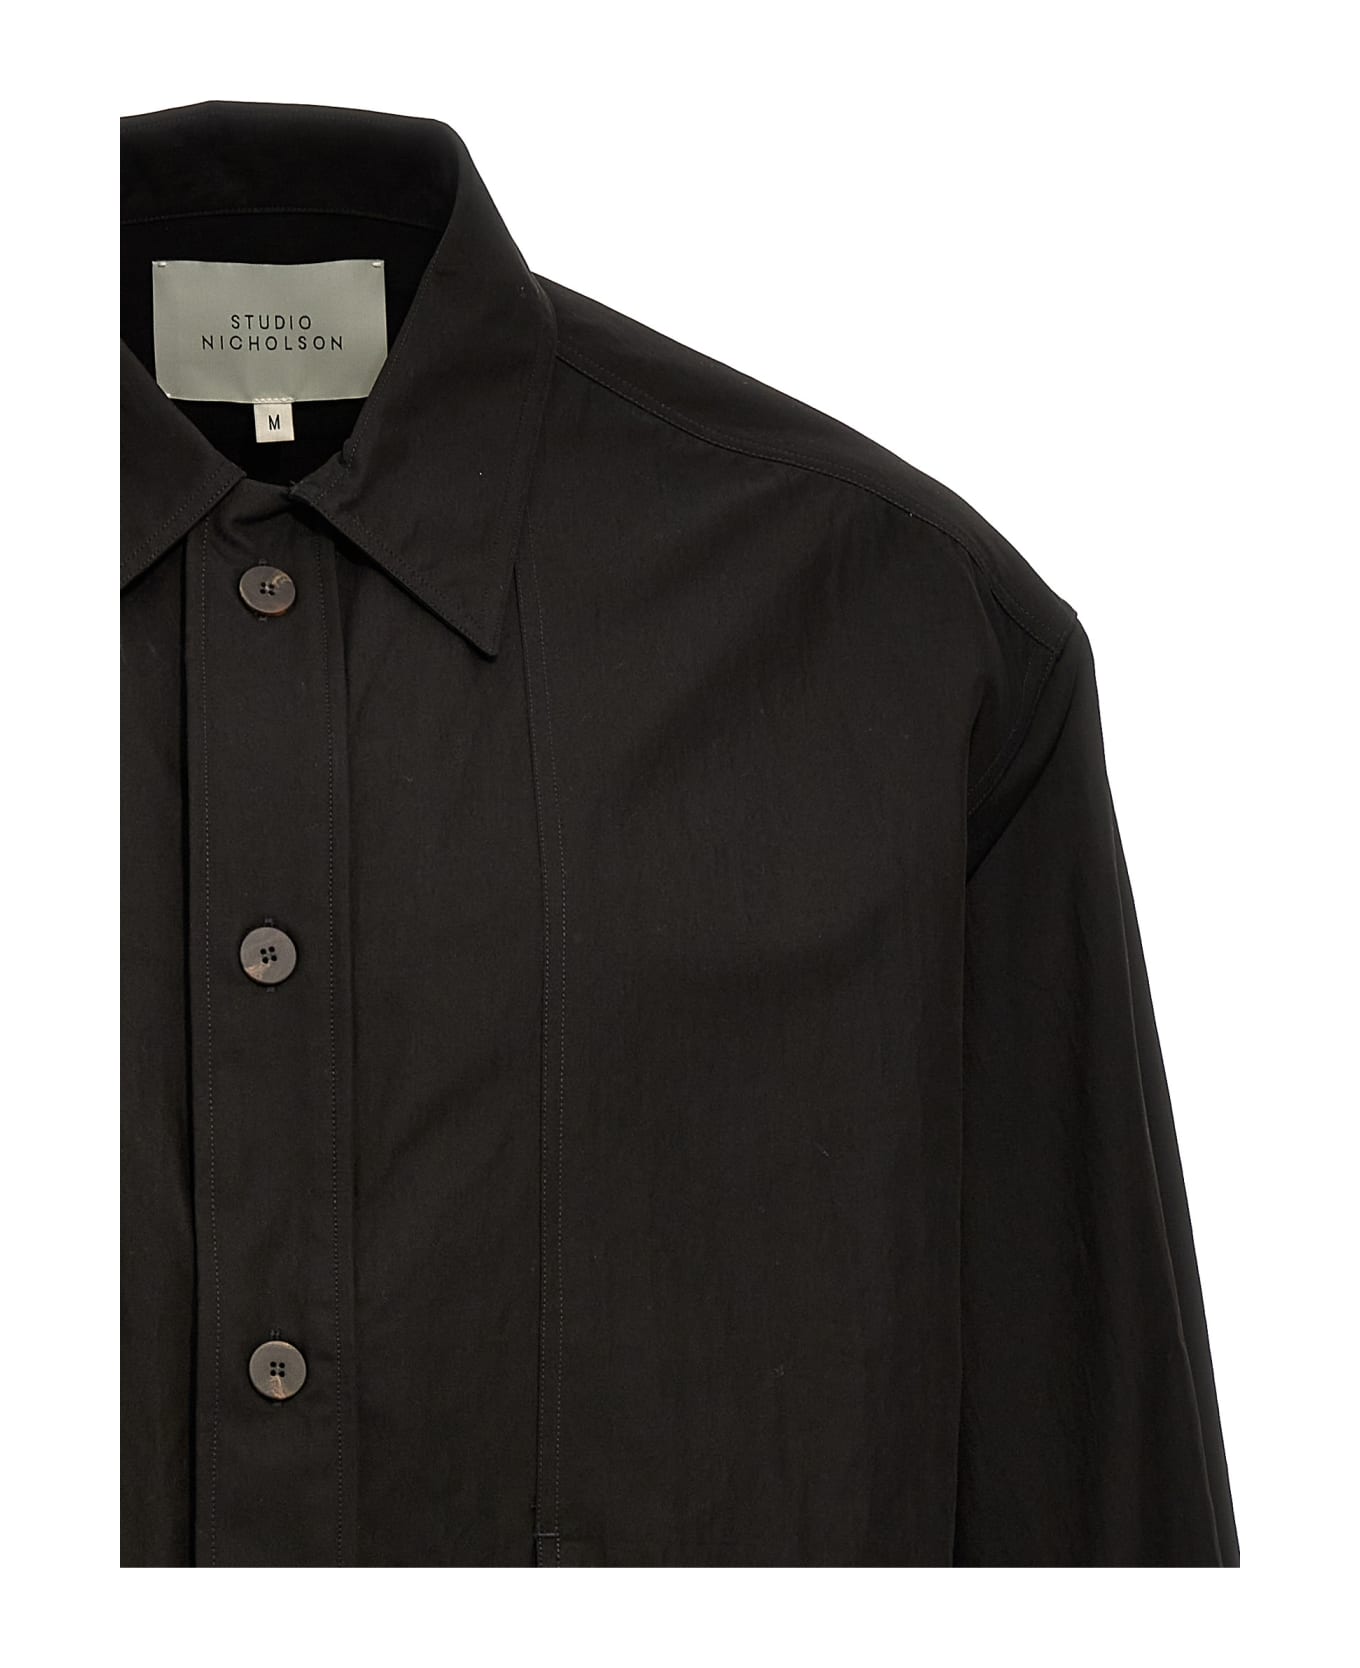 Studio Nicholson 'military' Shirt - Black   シャツ